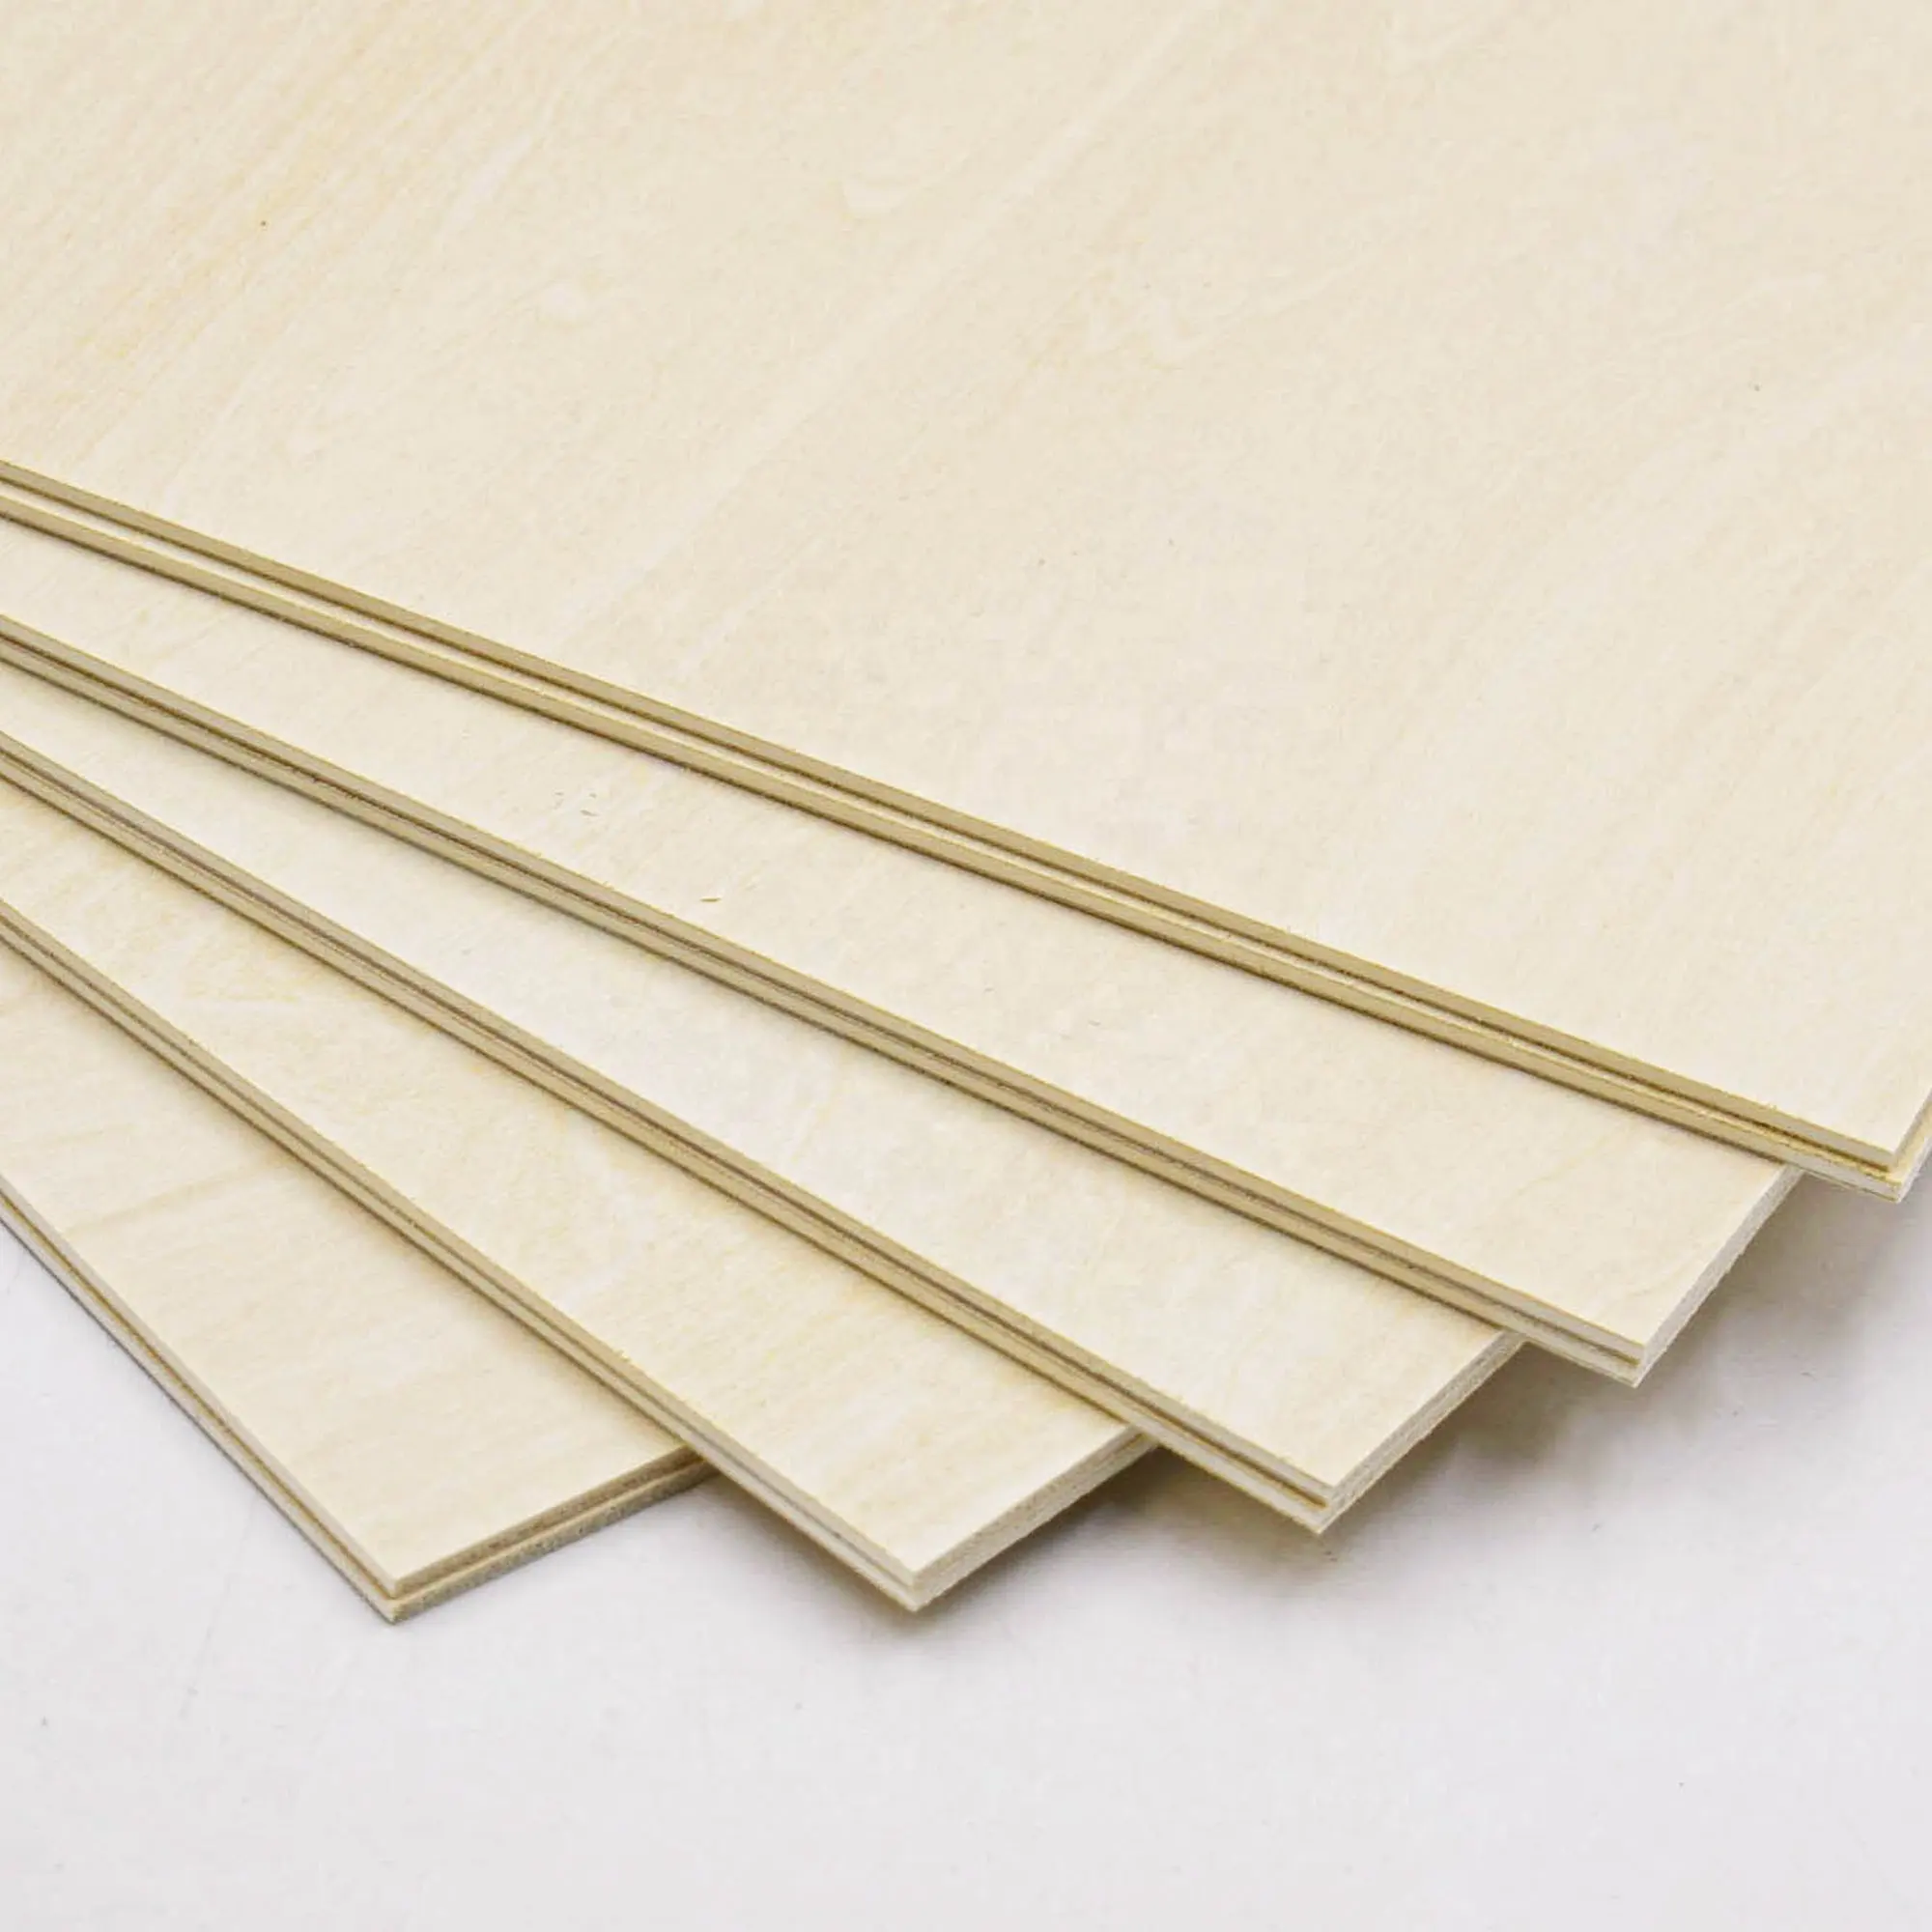 Lywood-heets de madera contrachapada para corte láser CNC, 3mm